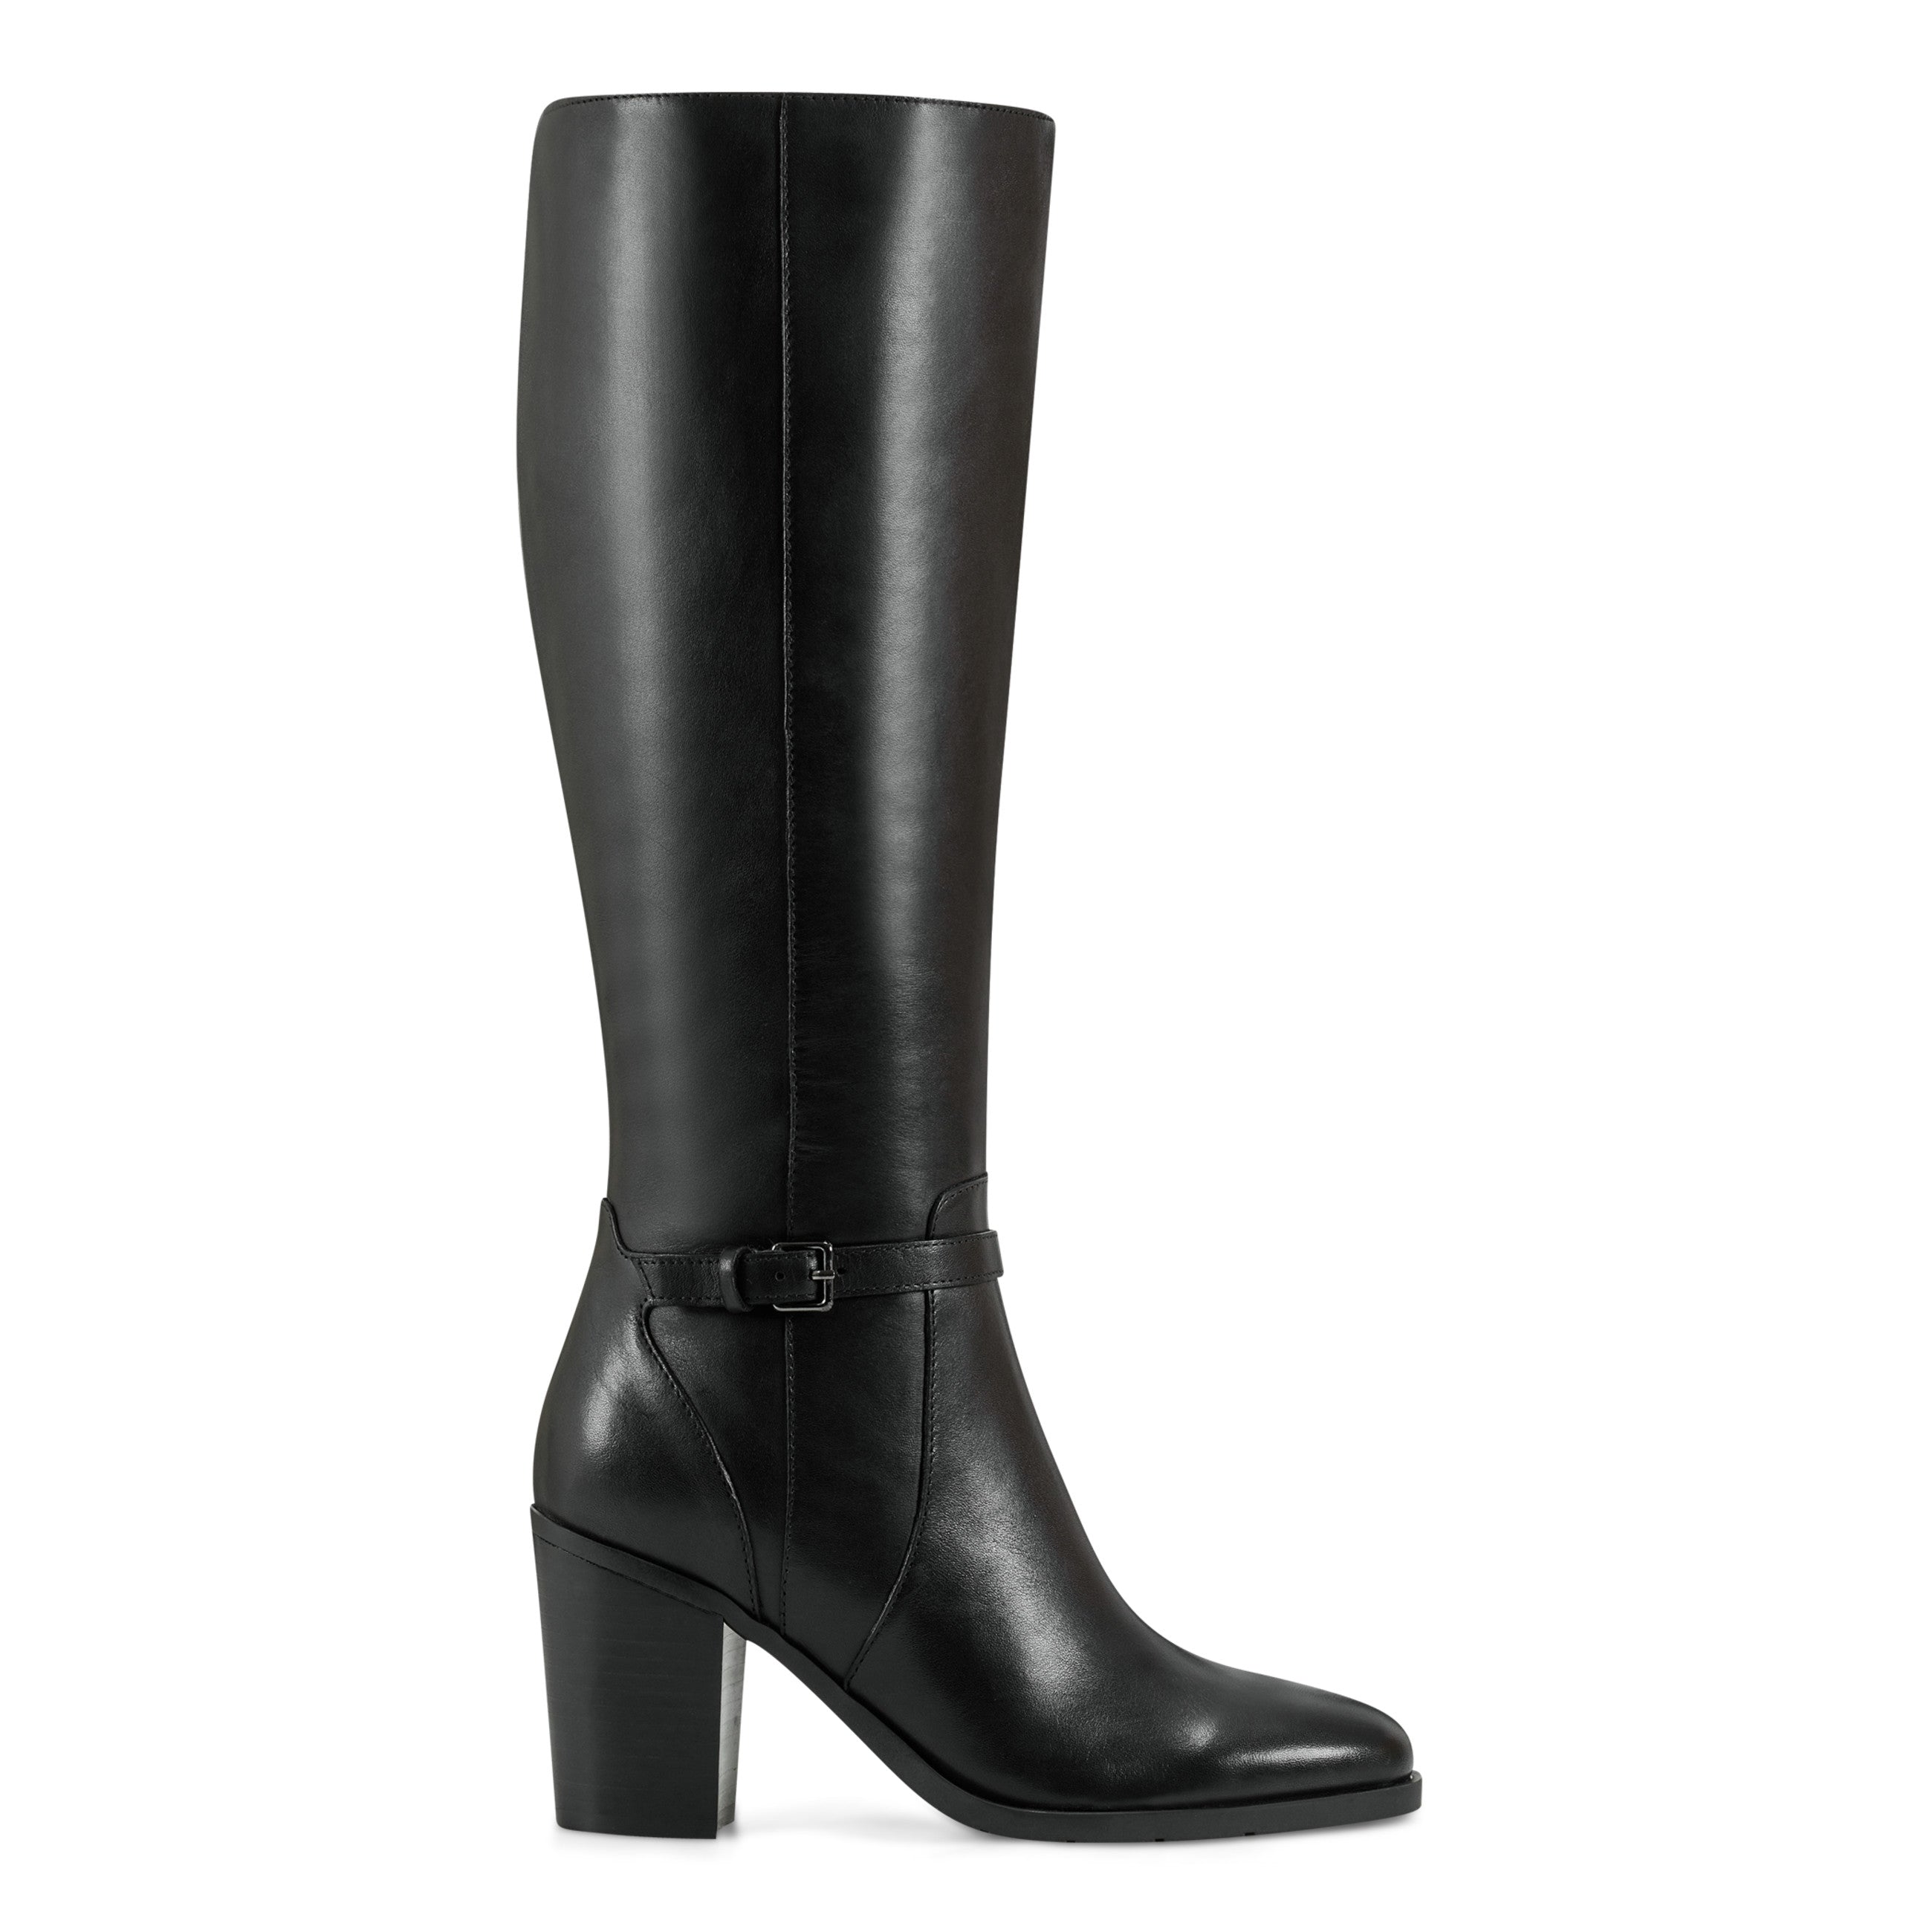 Buy Boots With Heels 2 Inch online | Lazada.com.ph